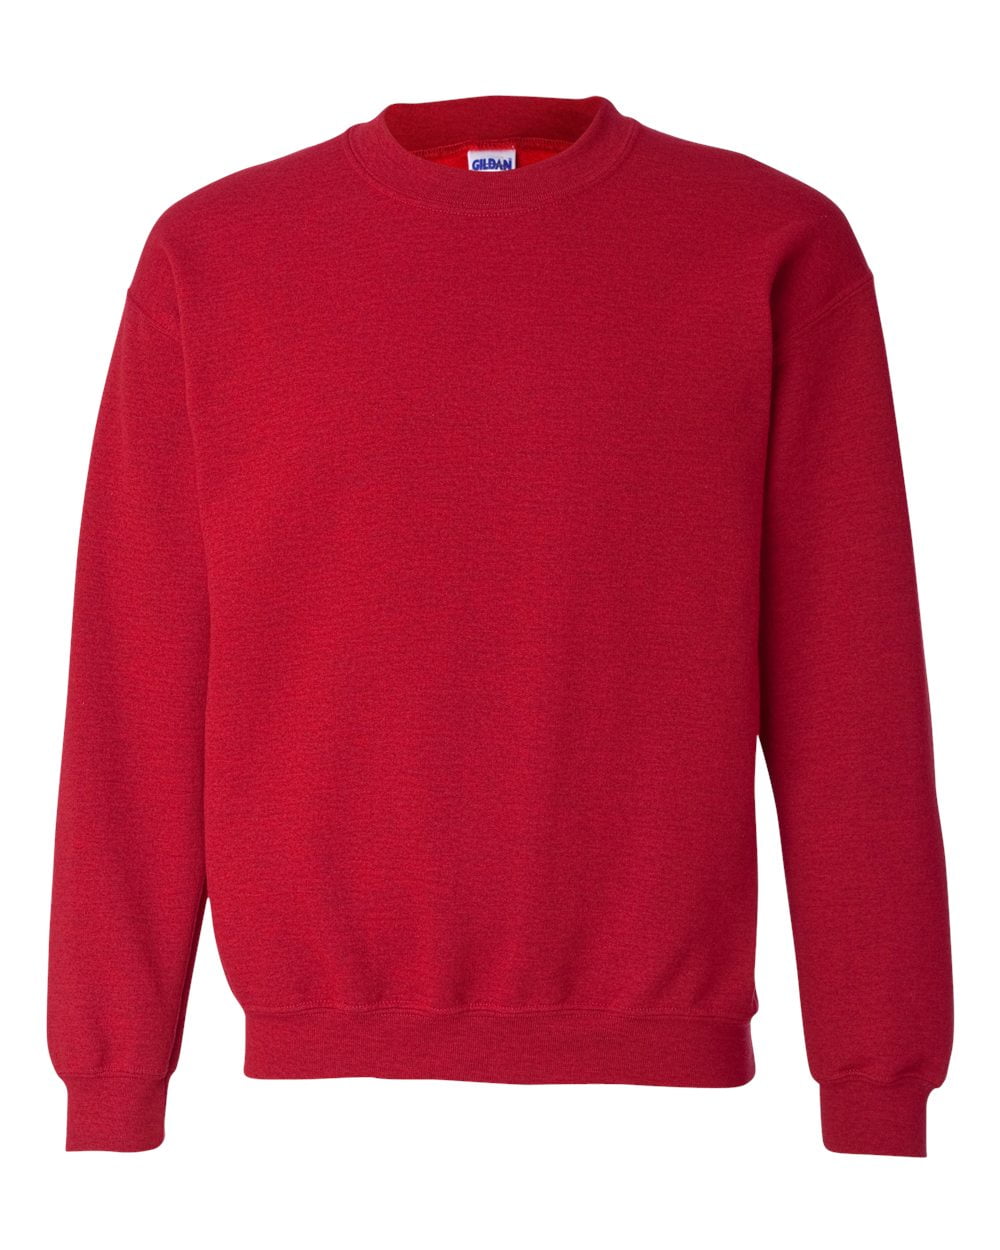 Men Multi Colors Sweatshirt Men Crewneck Color Cardinal Red Large Size - Walmart.com